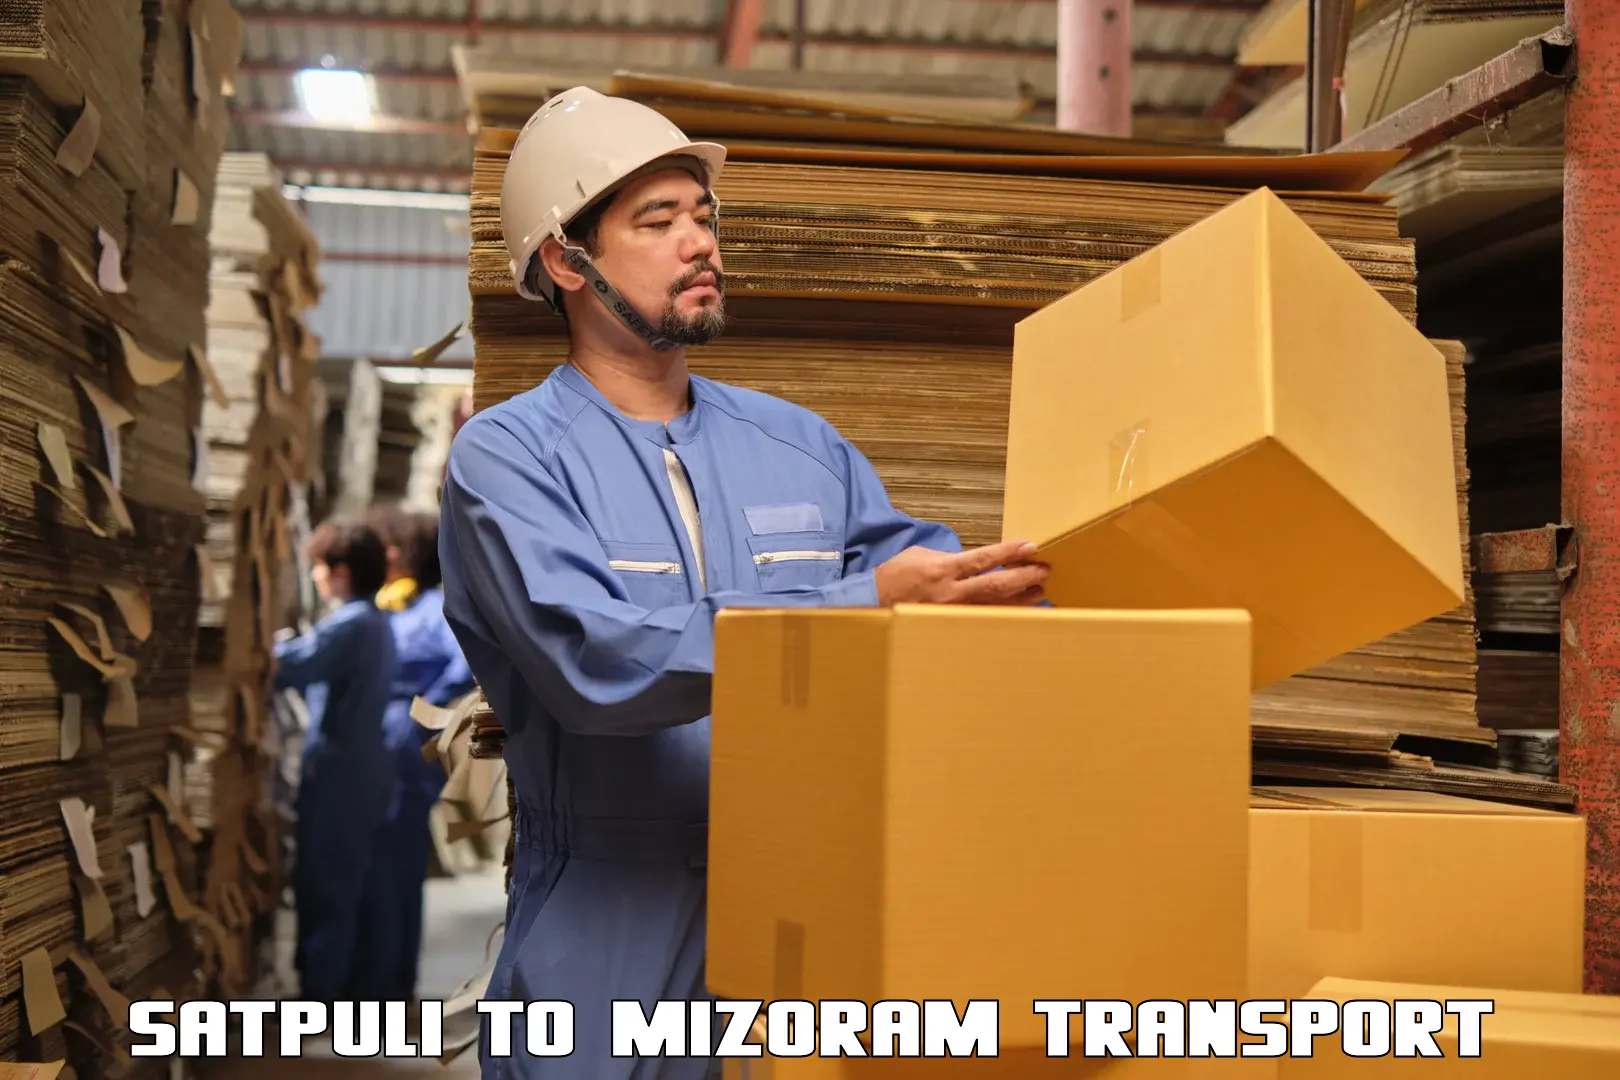 Container transport service Satpuli to Mizoram